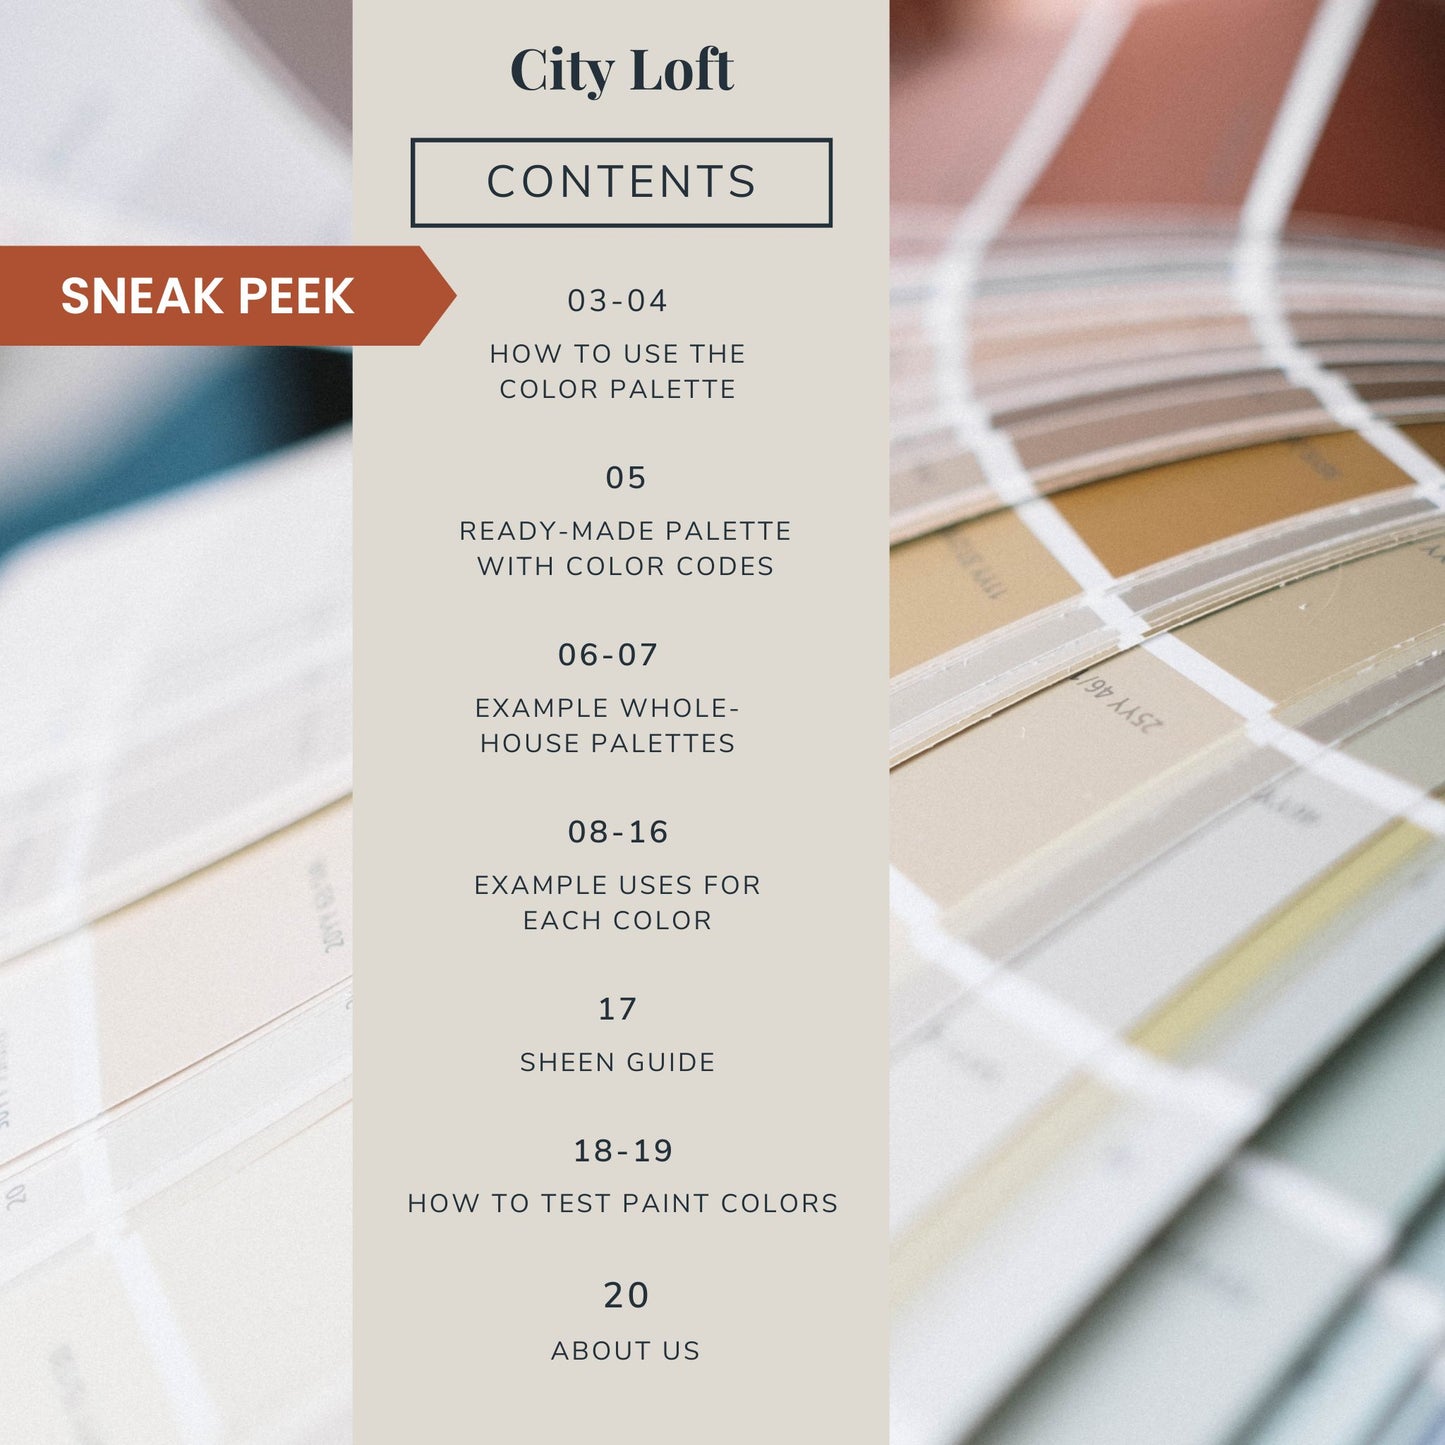 Contents list for Sherwin-Williams City Loft color palette guide